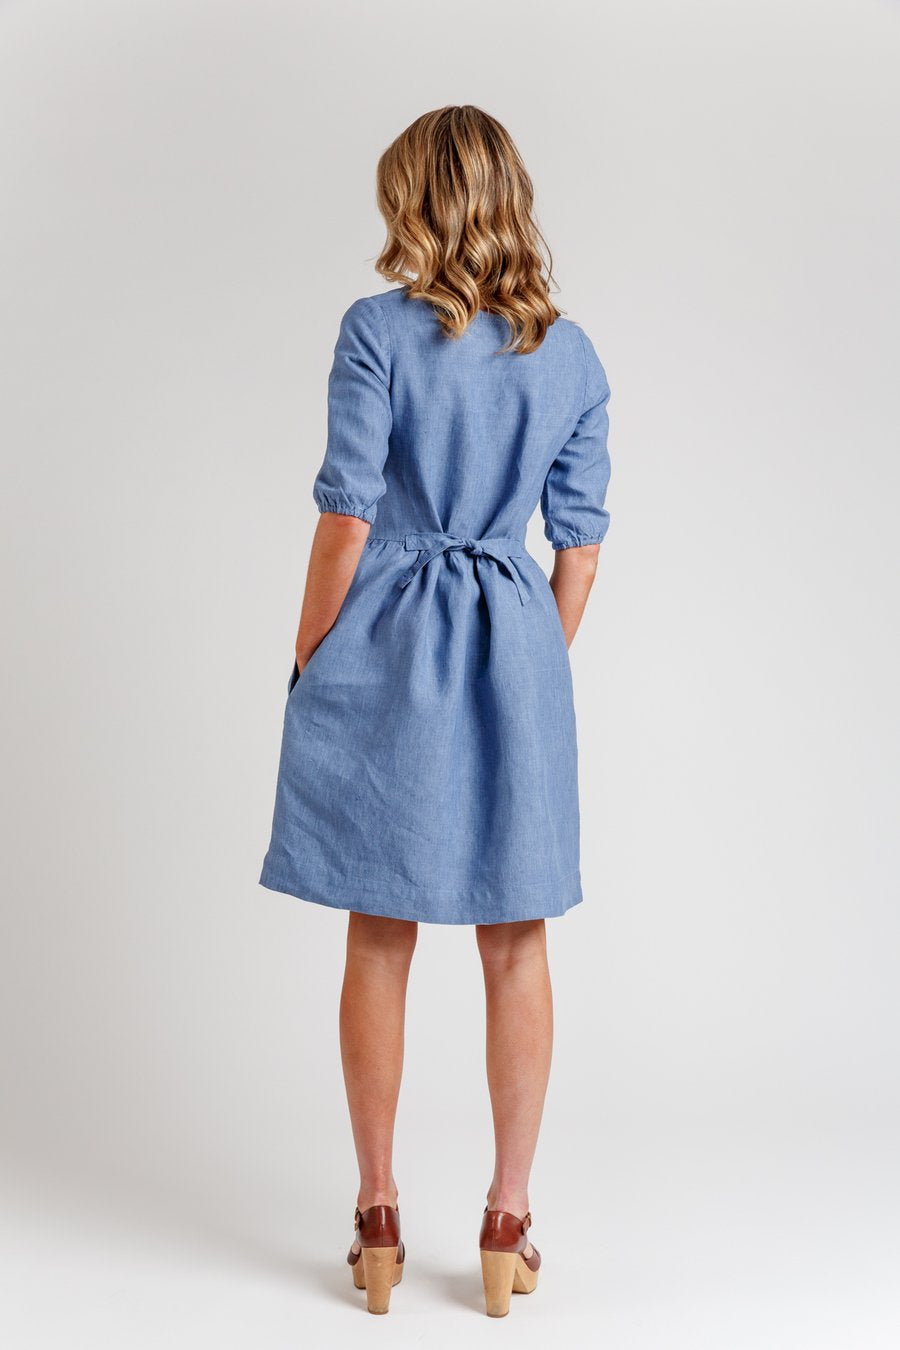 Darling Ranges Dress & Blouse by Megan Nielsen Patterns – Sew Yarn Crafty &  Studio